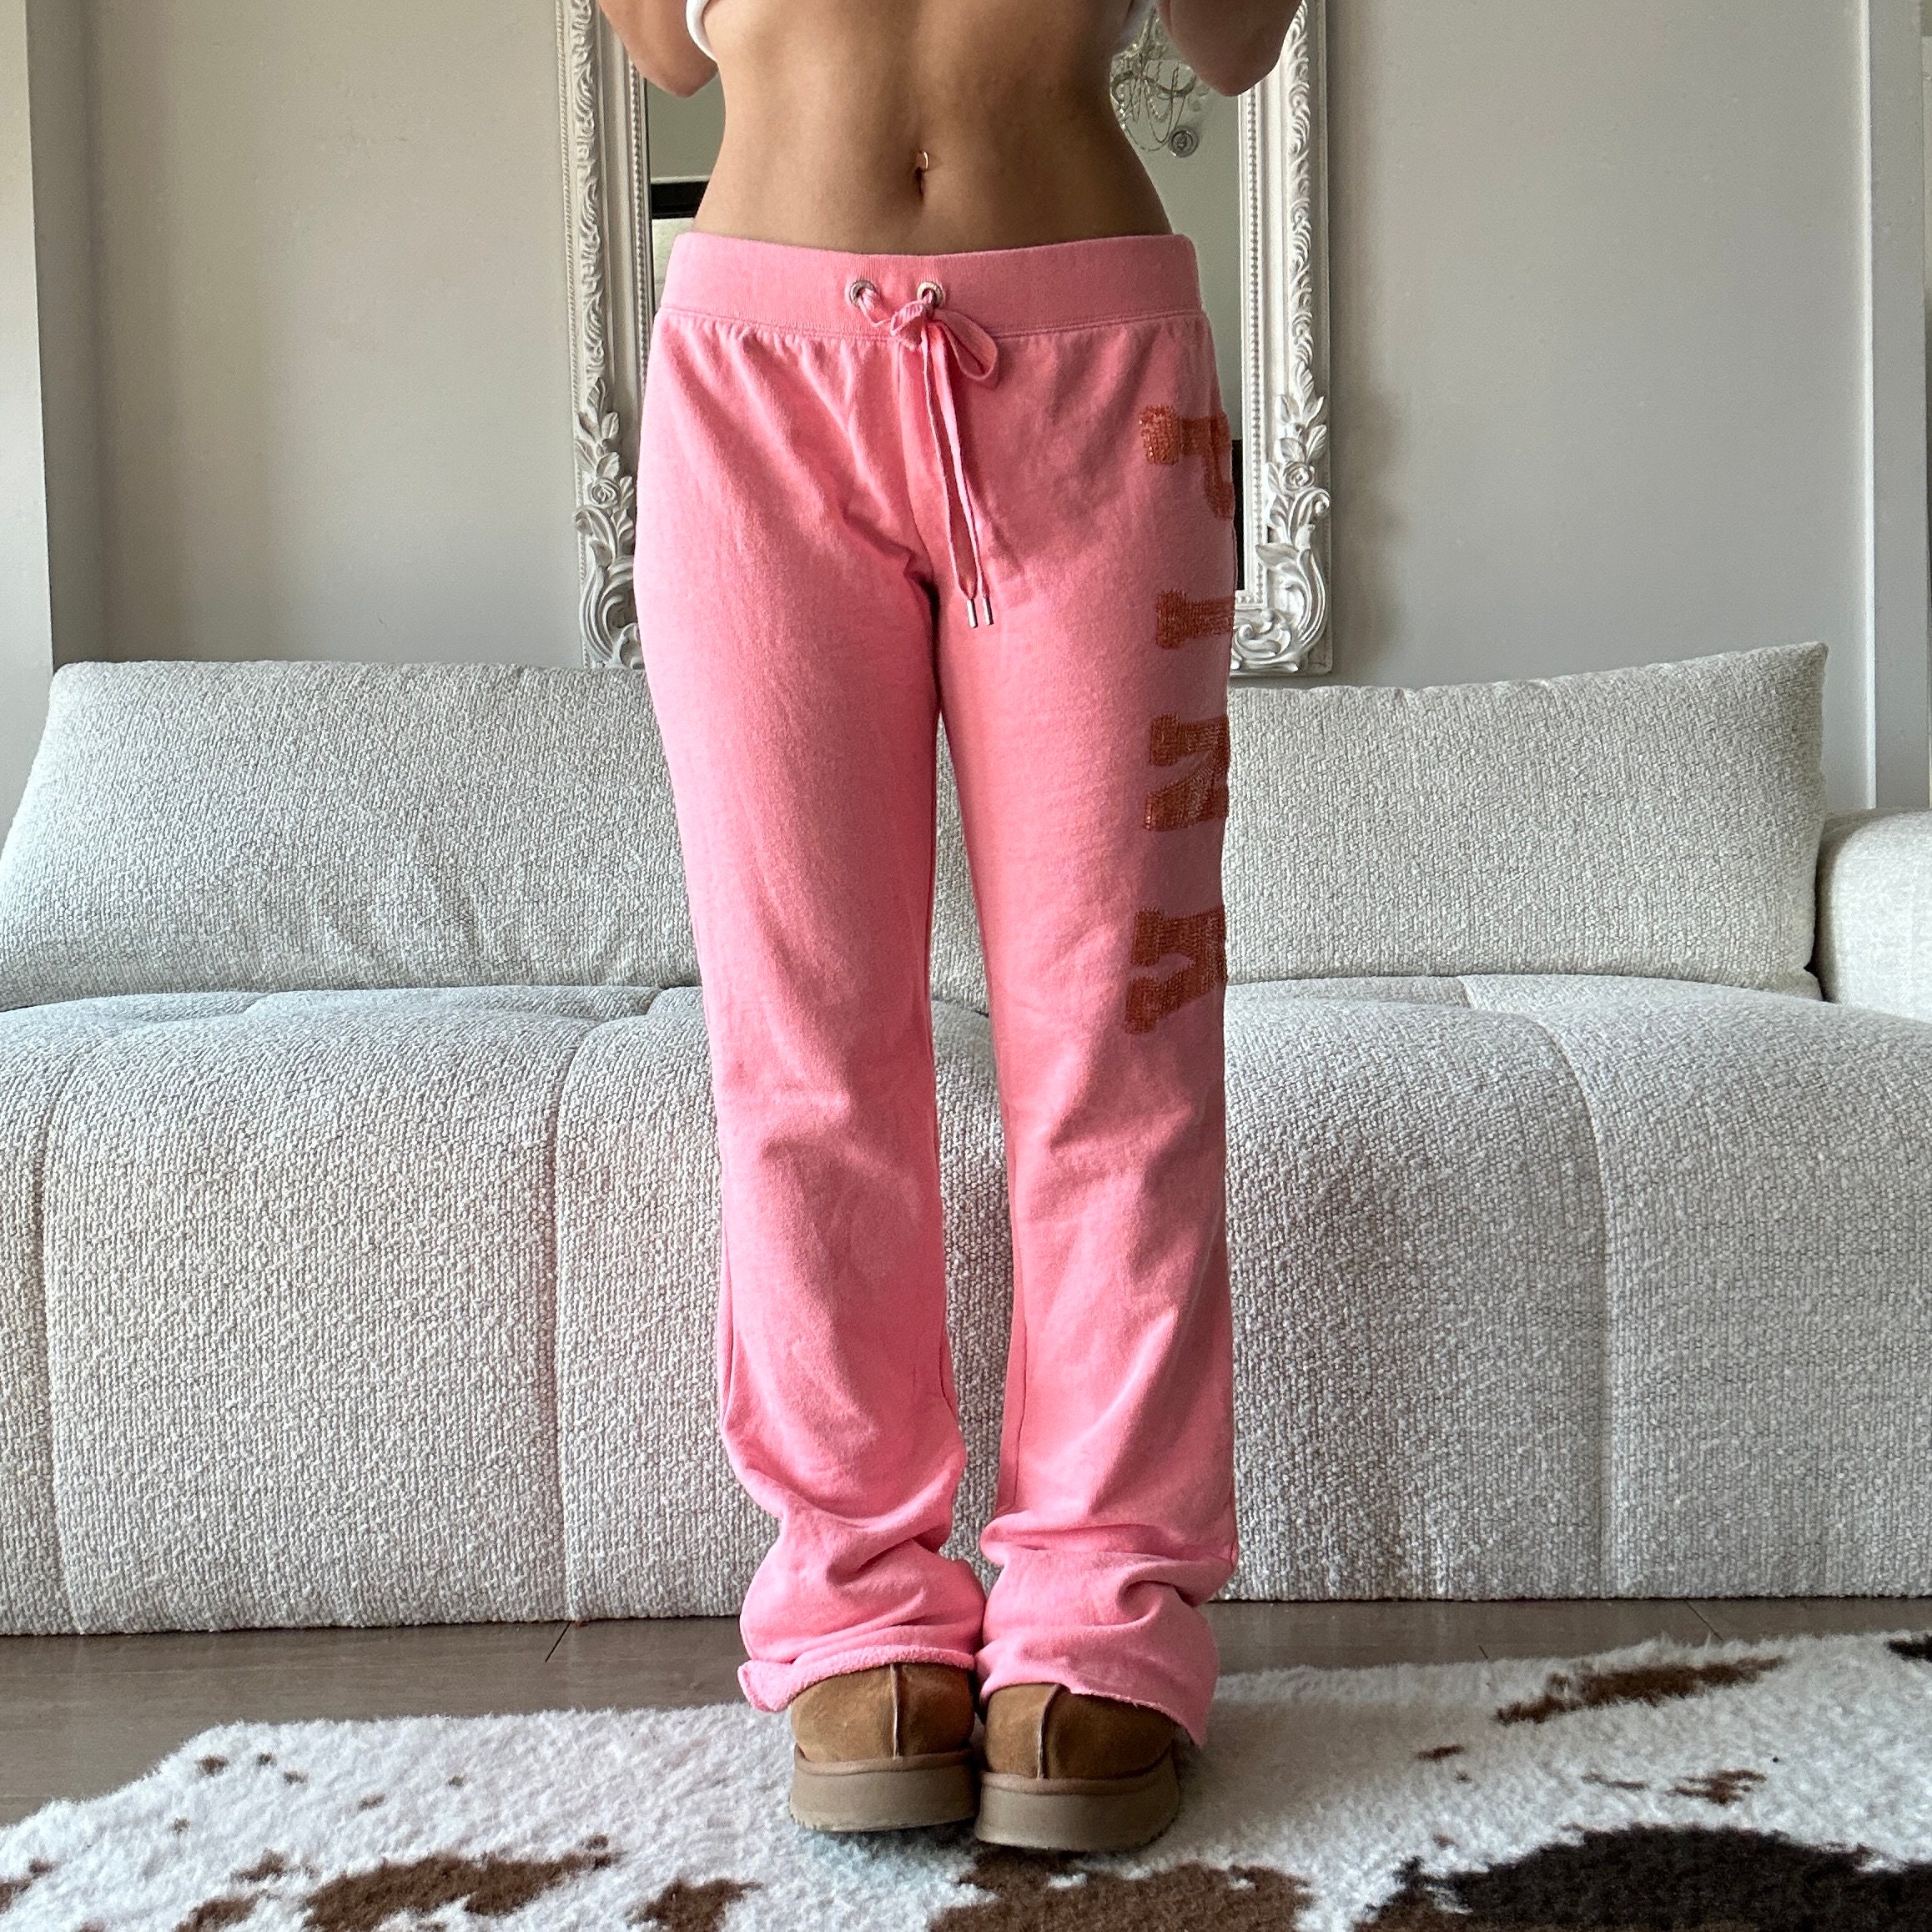 Victoria's Secret Pink sweatpants low rise flared yoga pants pink sequins